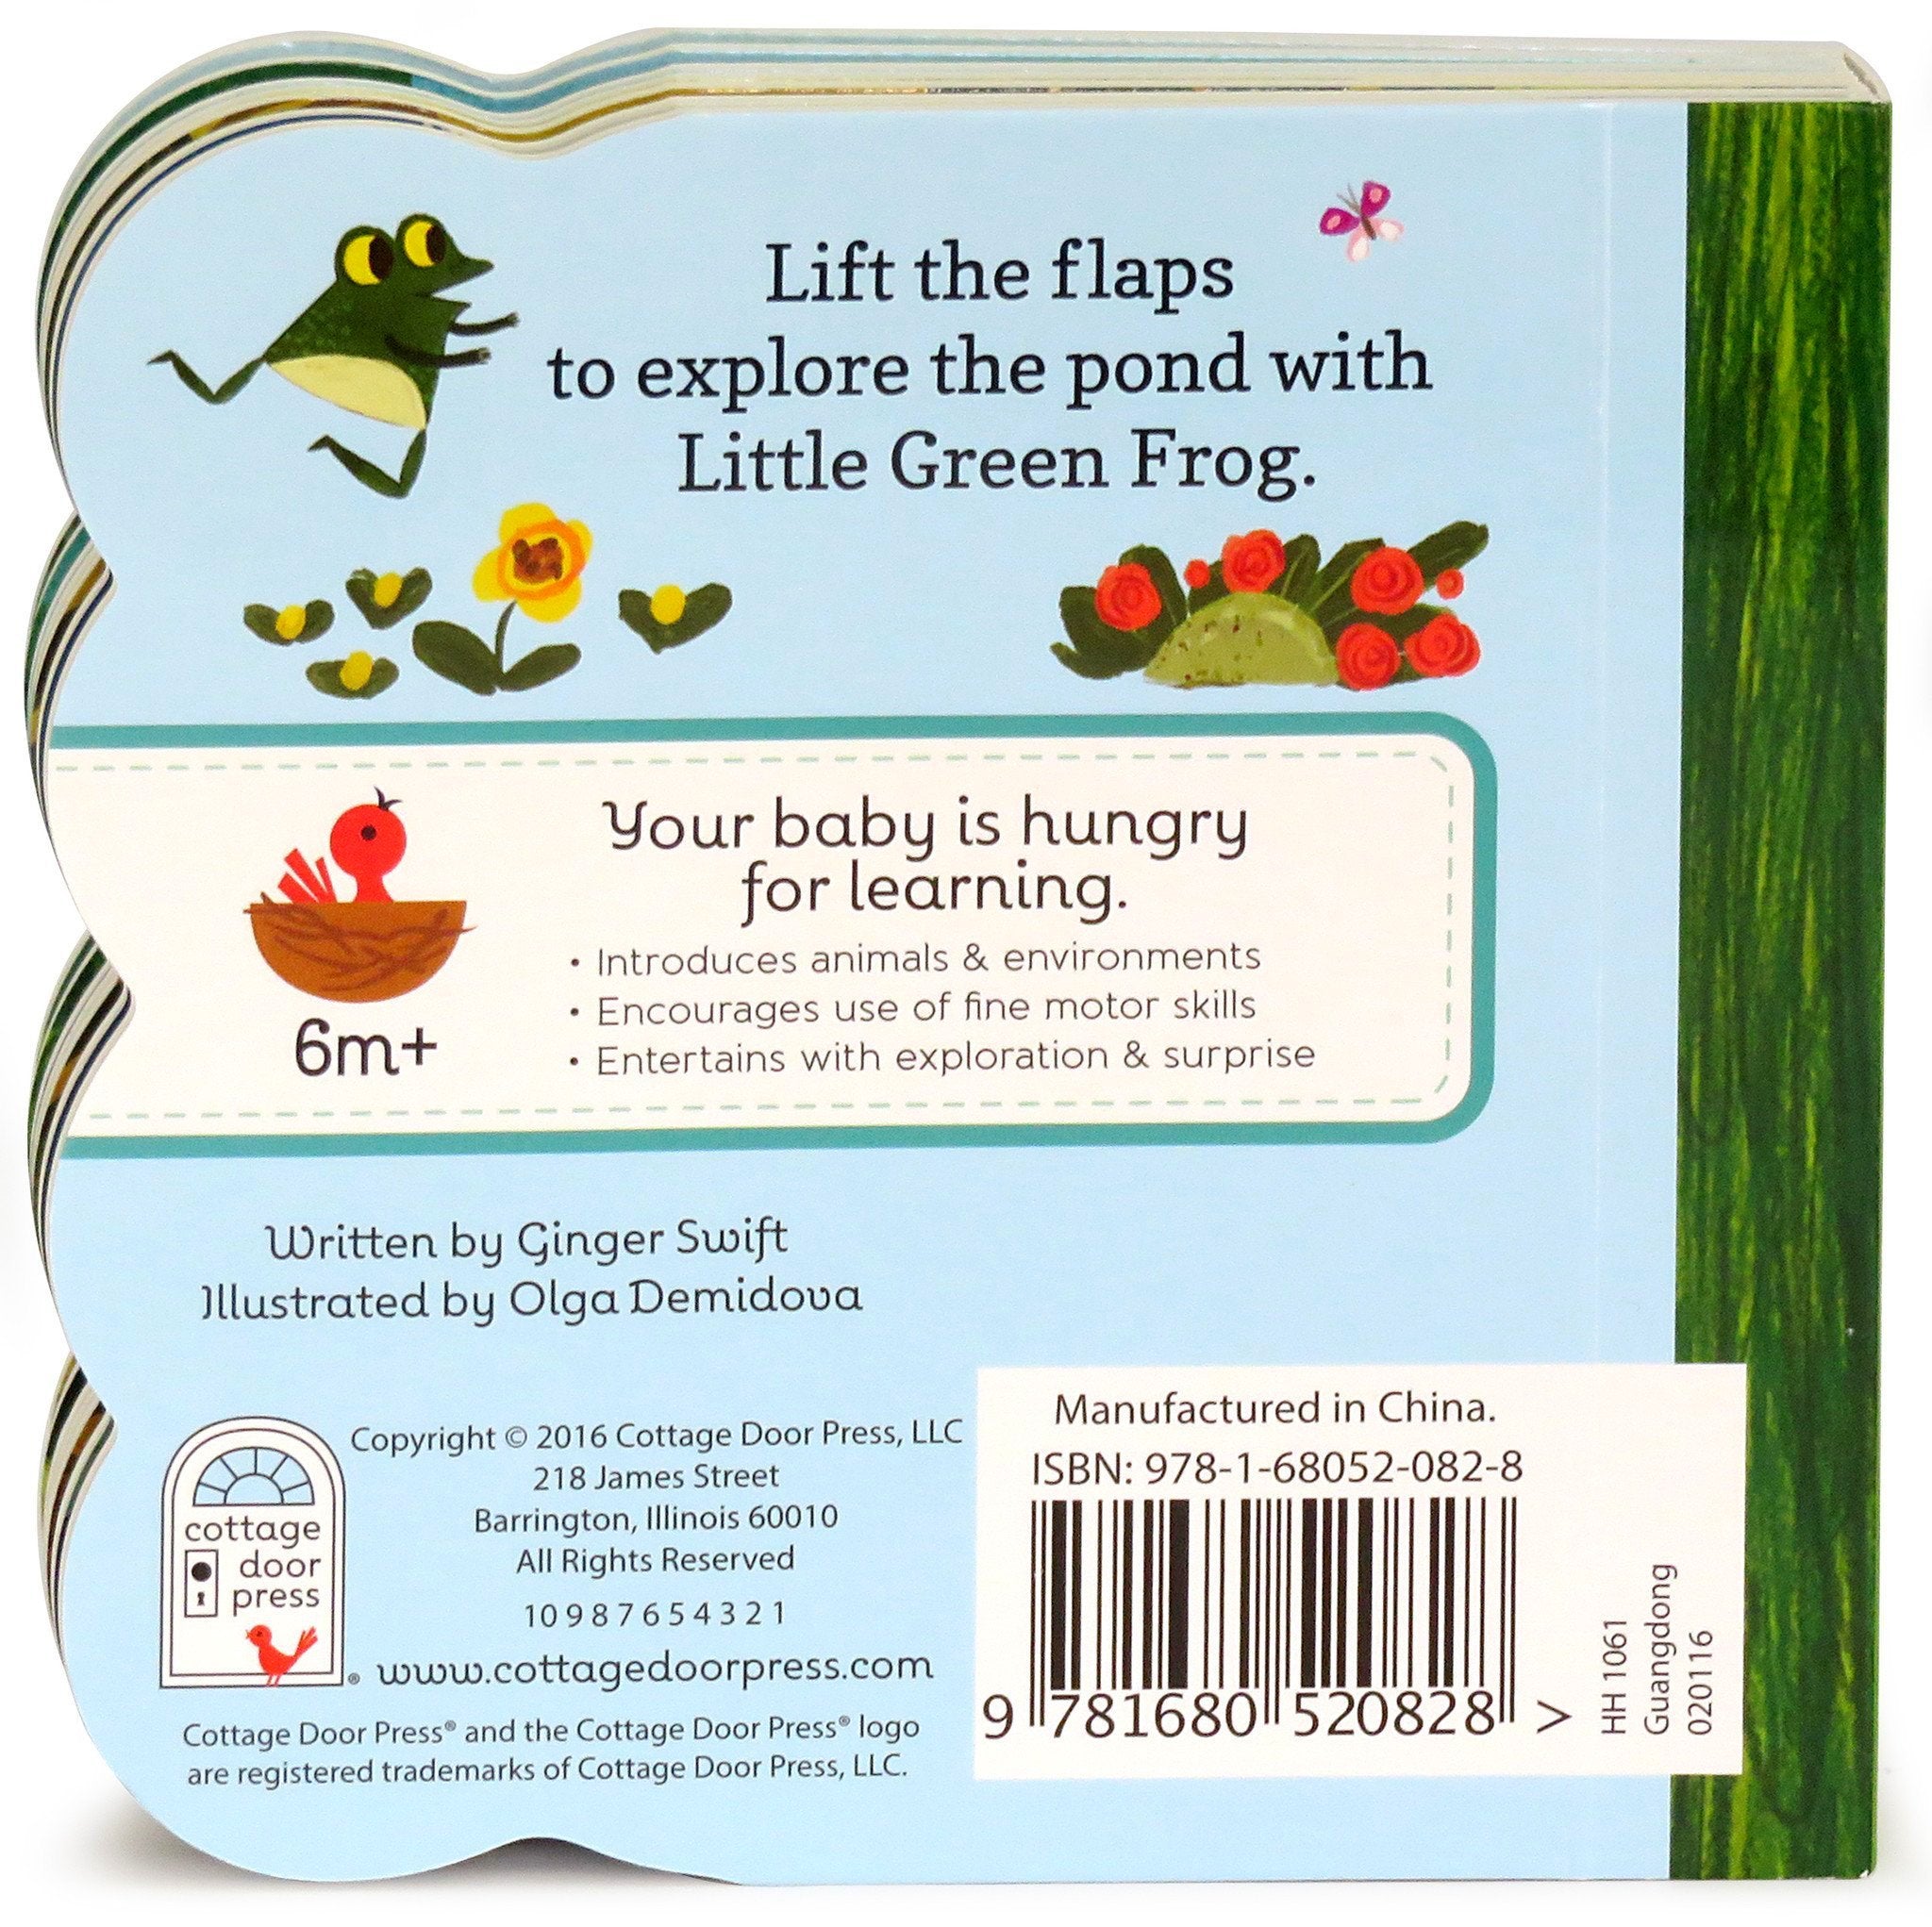 Little Green Frog Pond Lift-a-Flap Book    